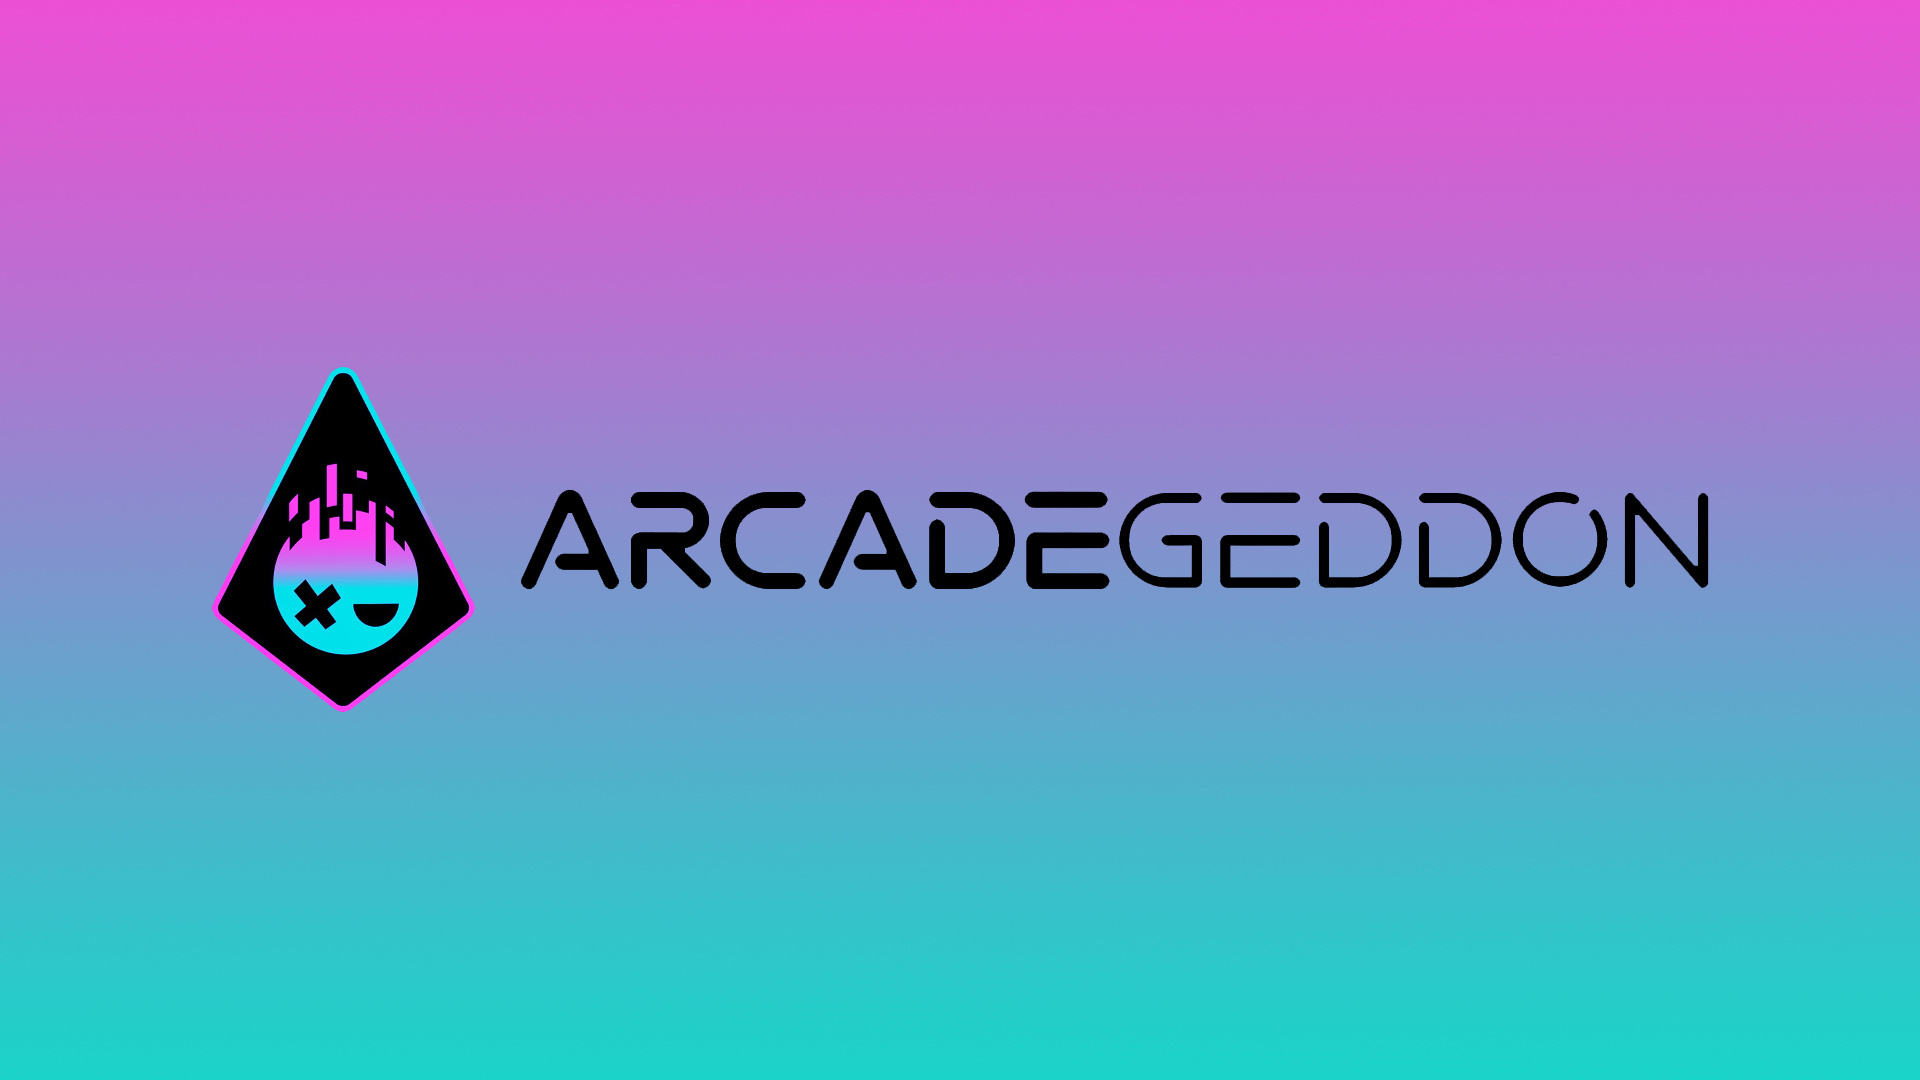 arcadegeddon codes